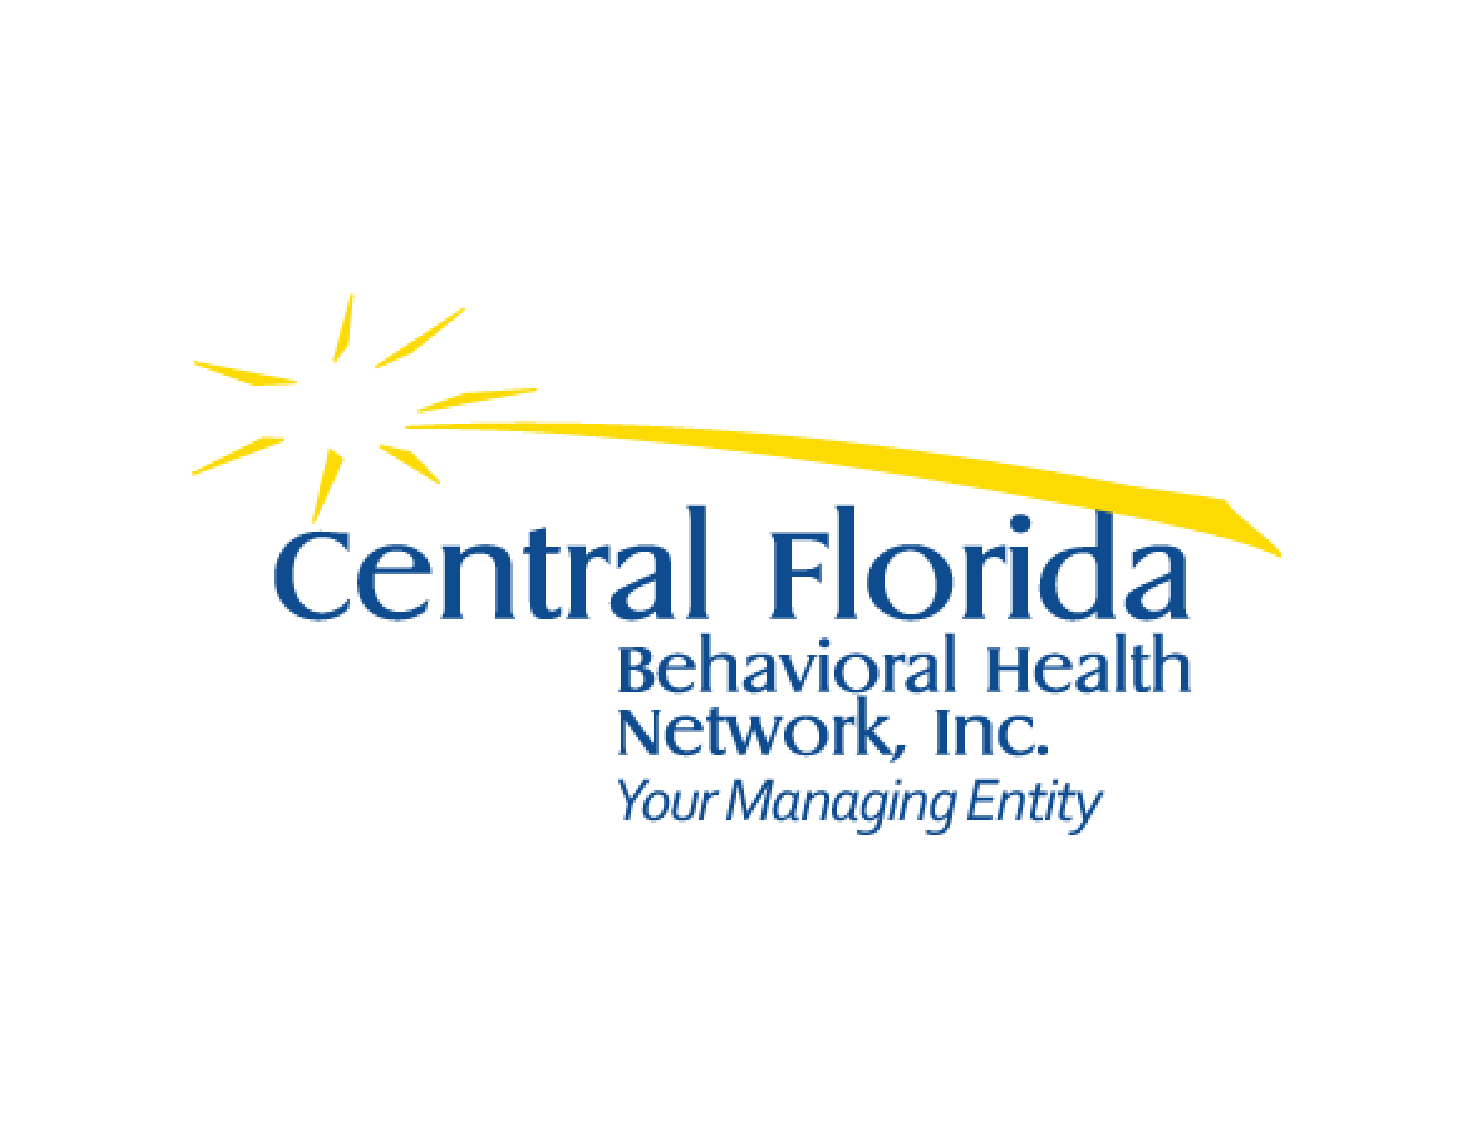 The Central Florida Behavioral Health Network